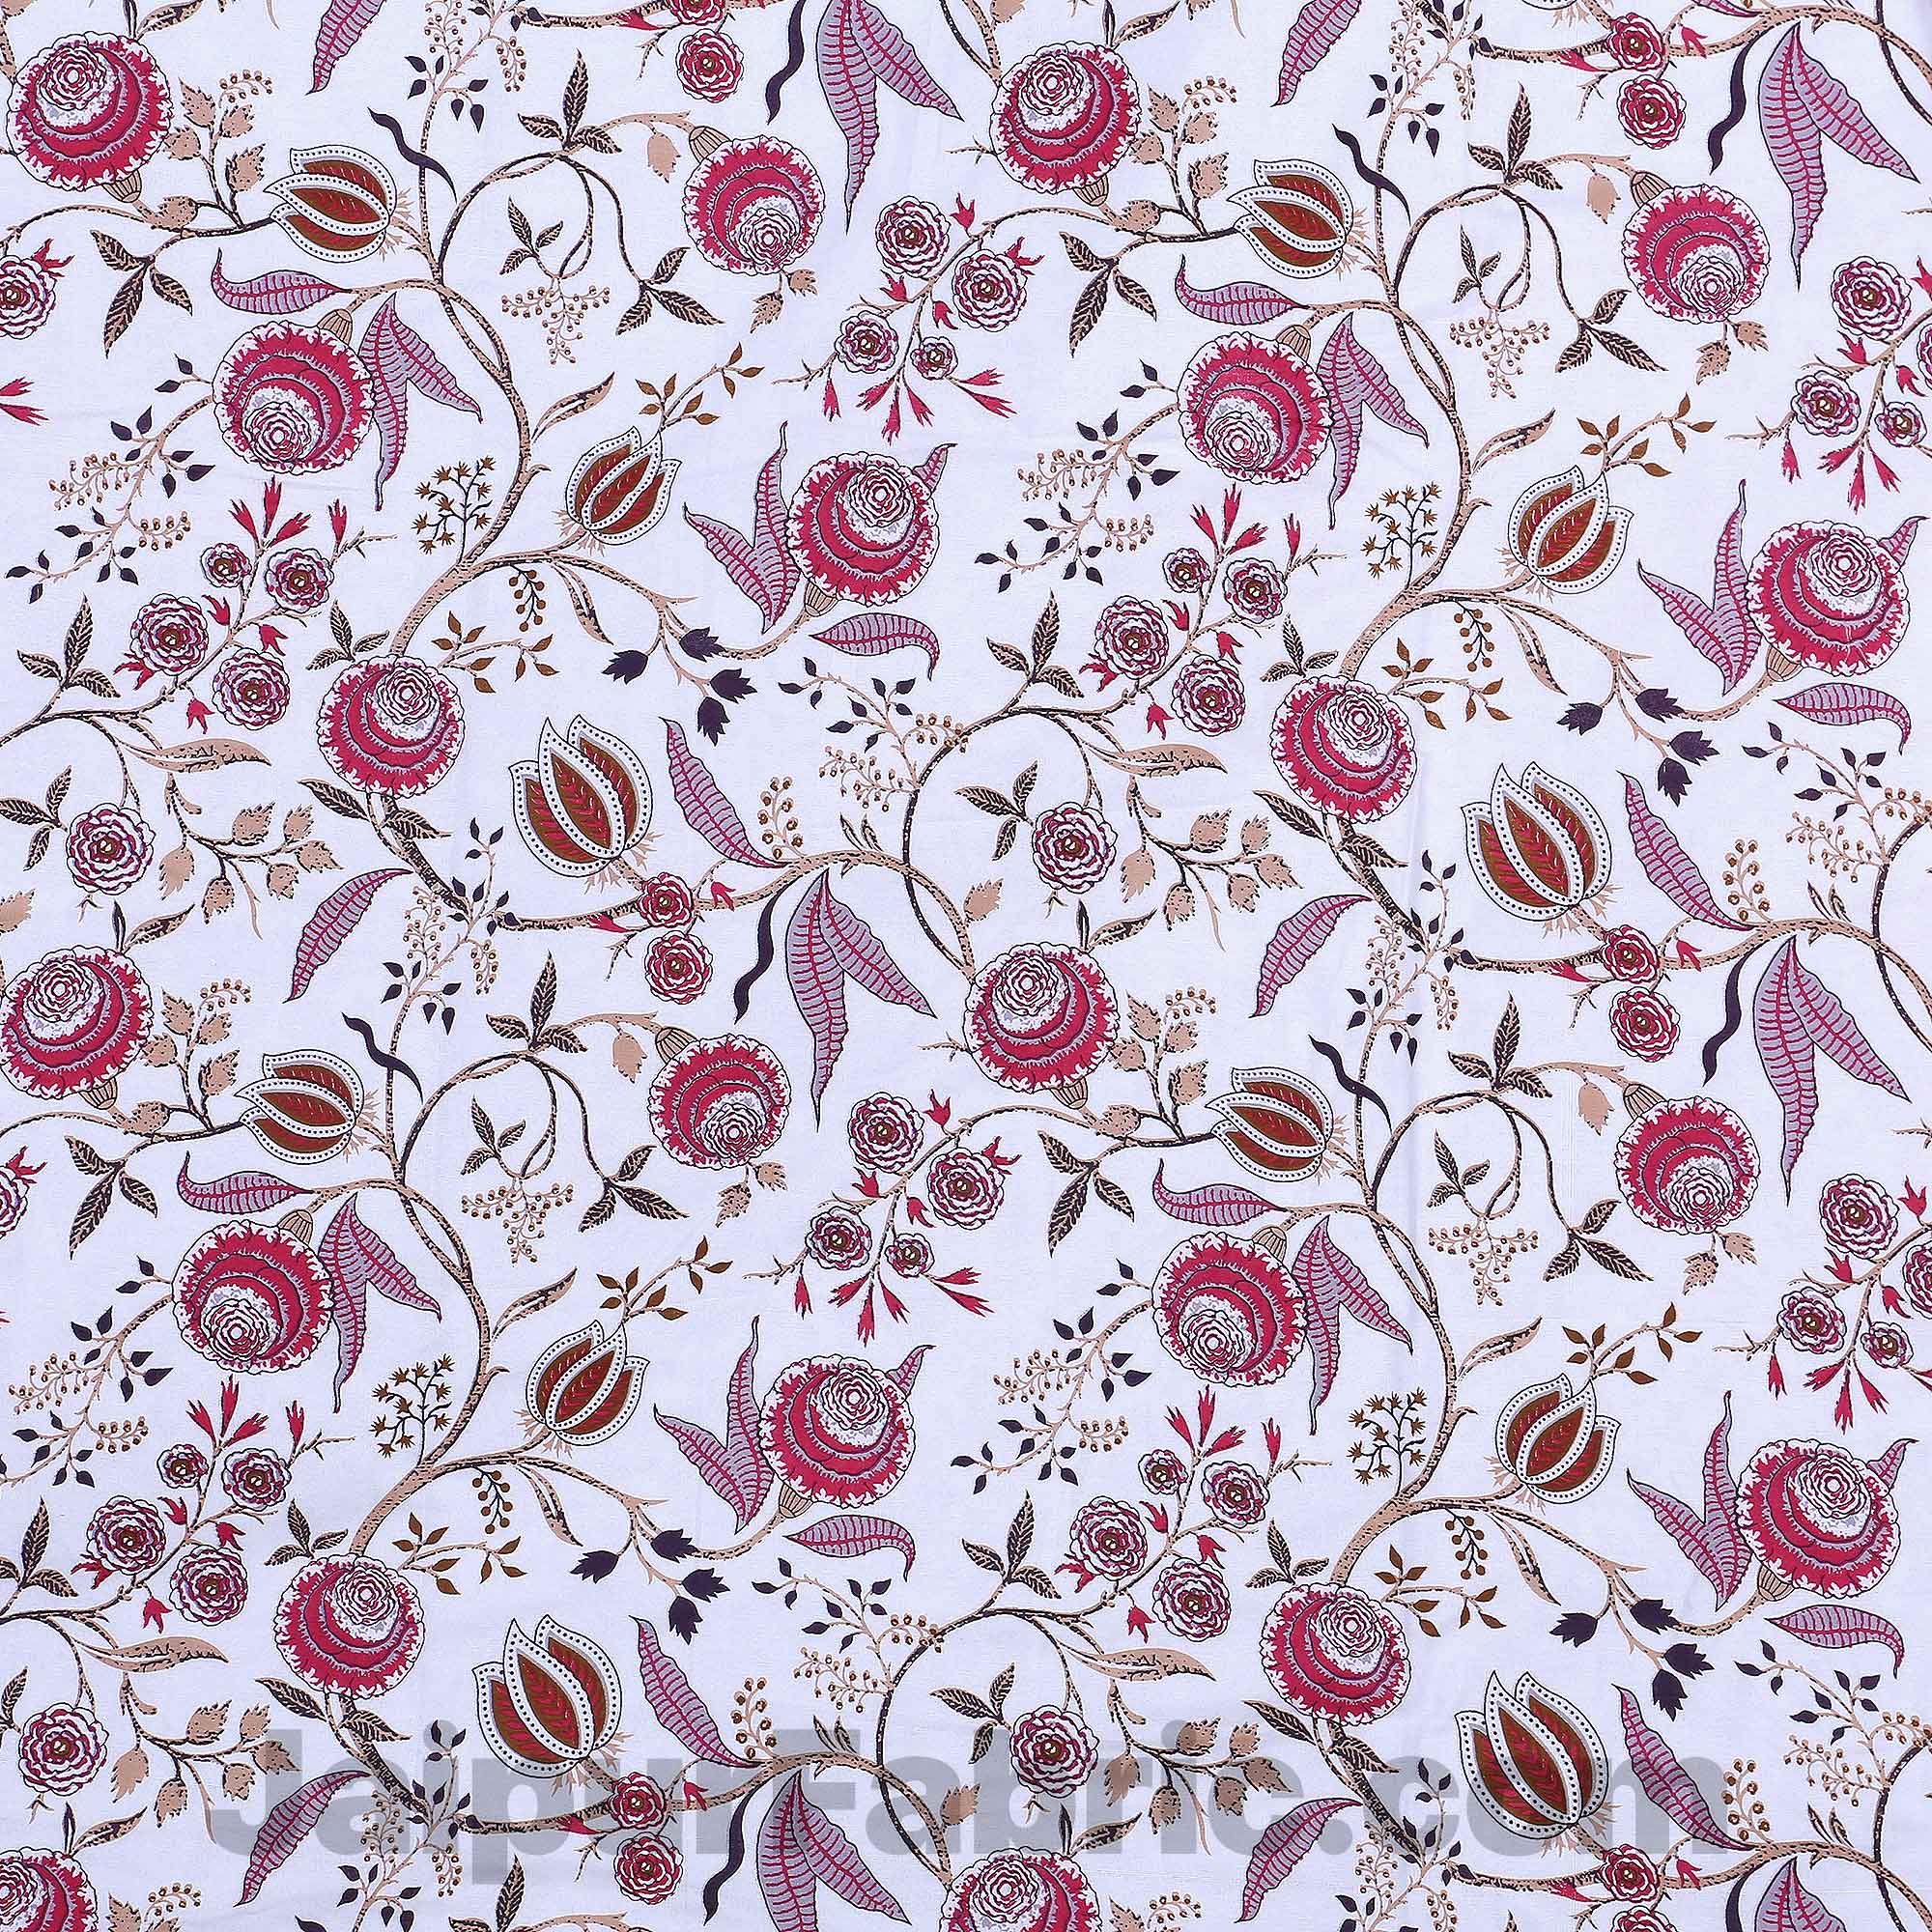 Pure Cotton Refreshing Floral Reversible Single Bed Blanket/ Duvet/Quilt/AC Dohar